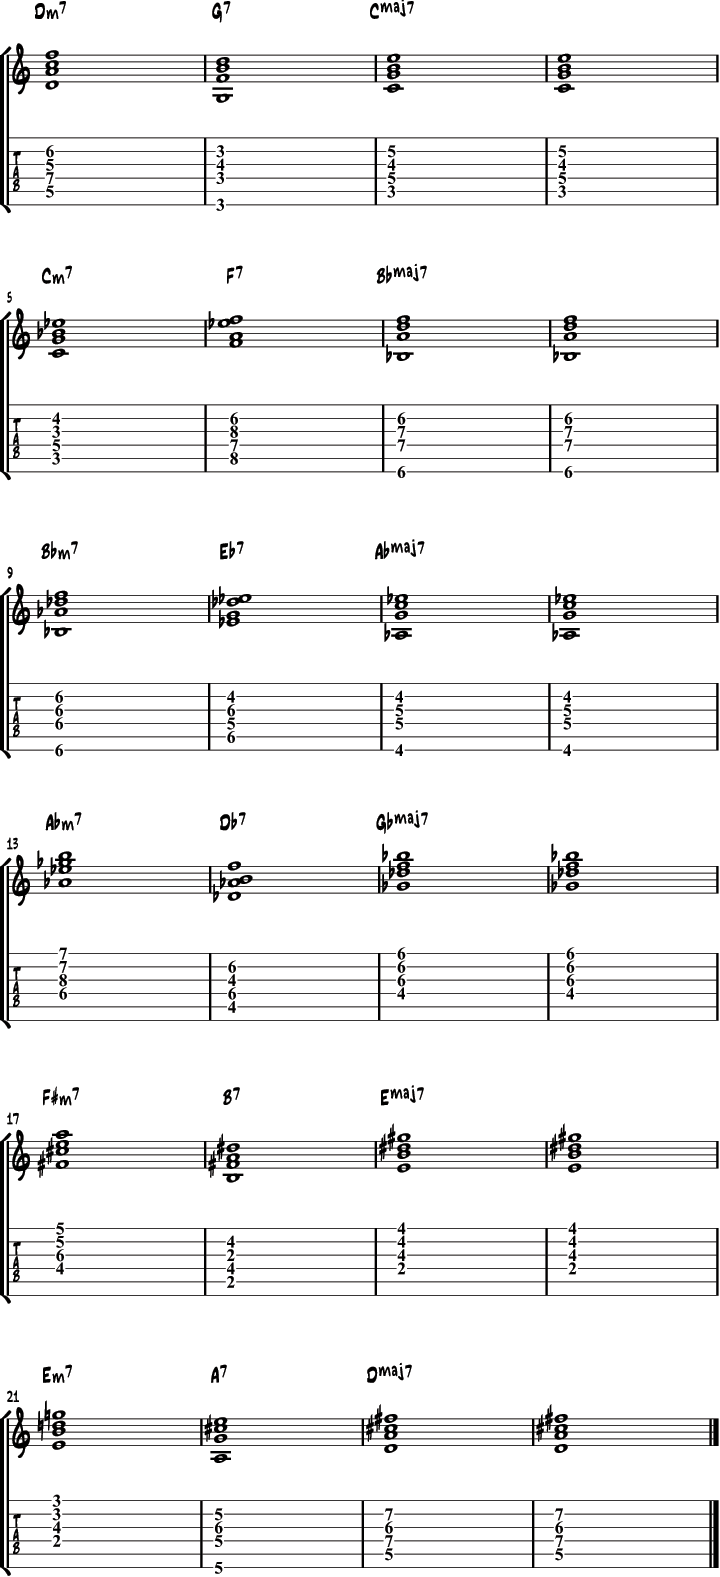 Beginner chords example 1